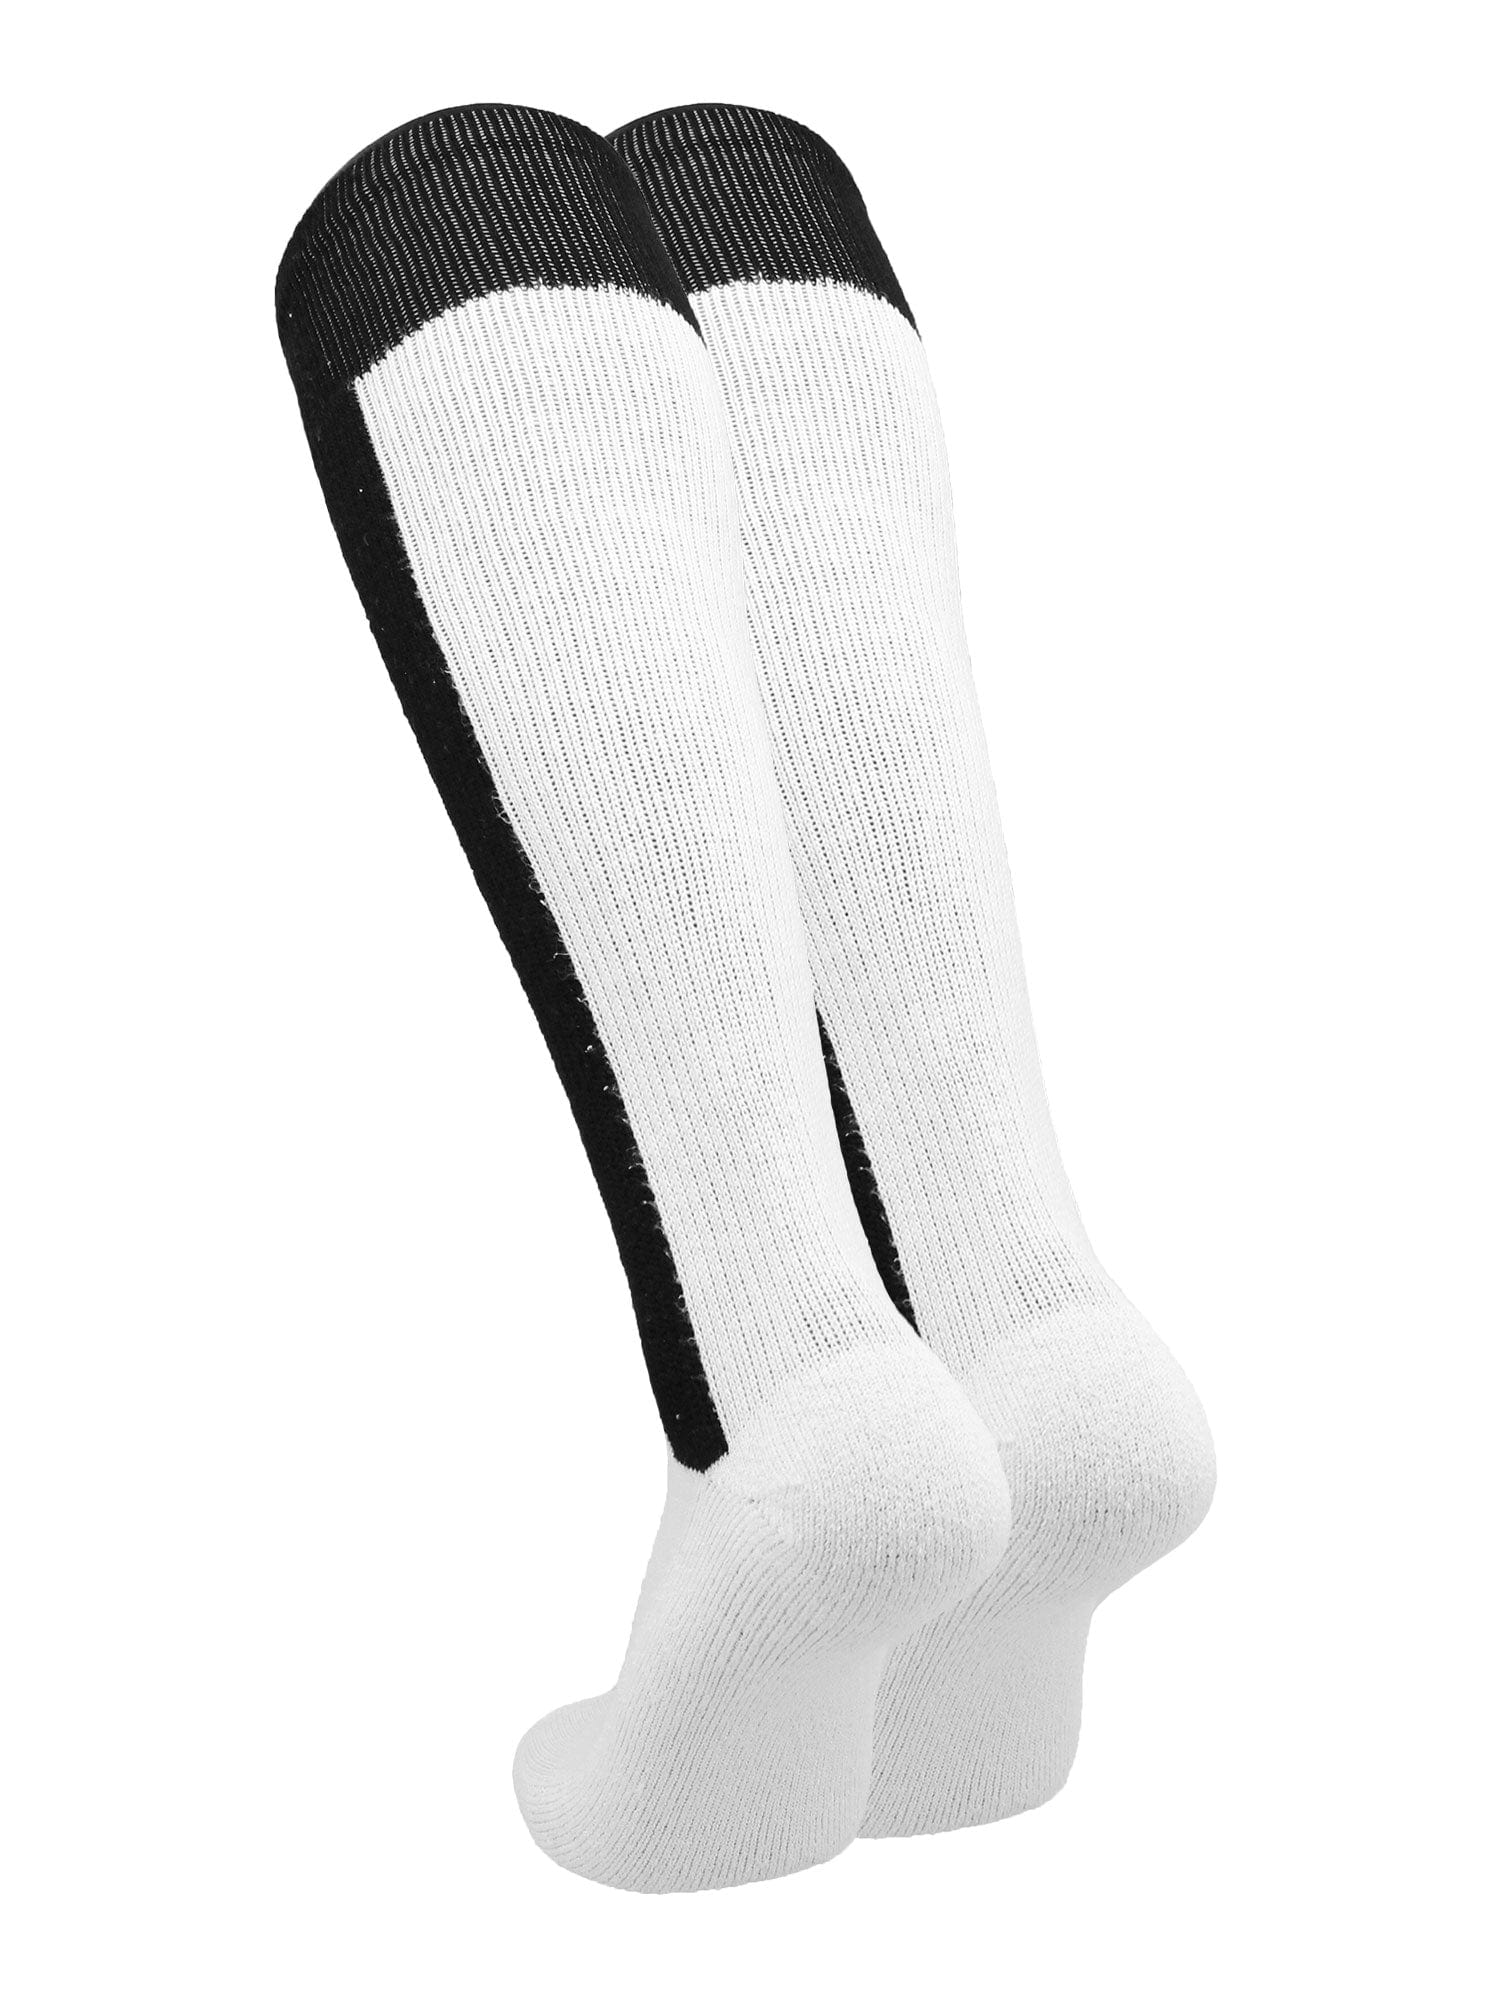 MK Socks PREMIUM Knit Baseball Softball USA Star Stirrup Knee high Socks